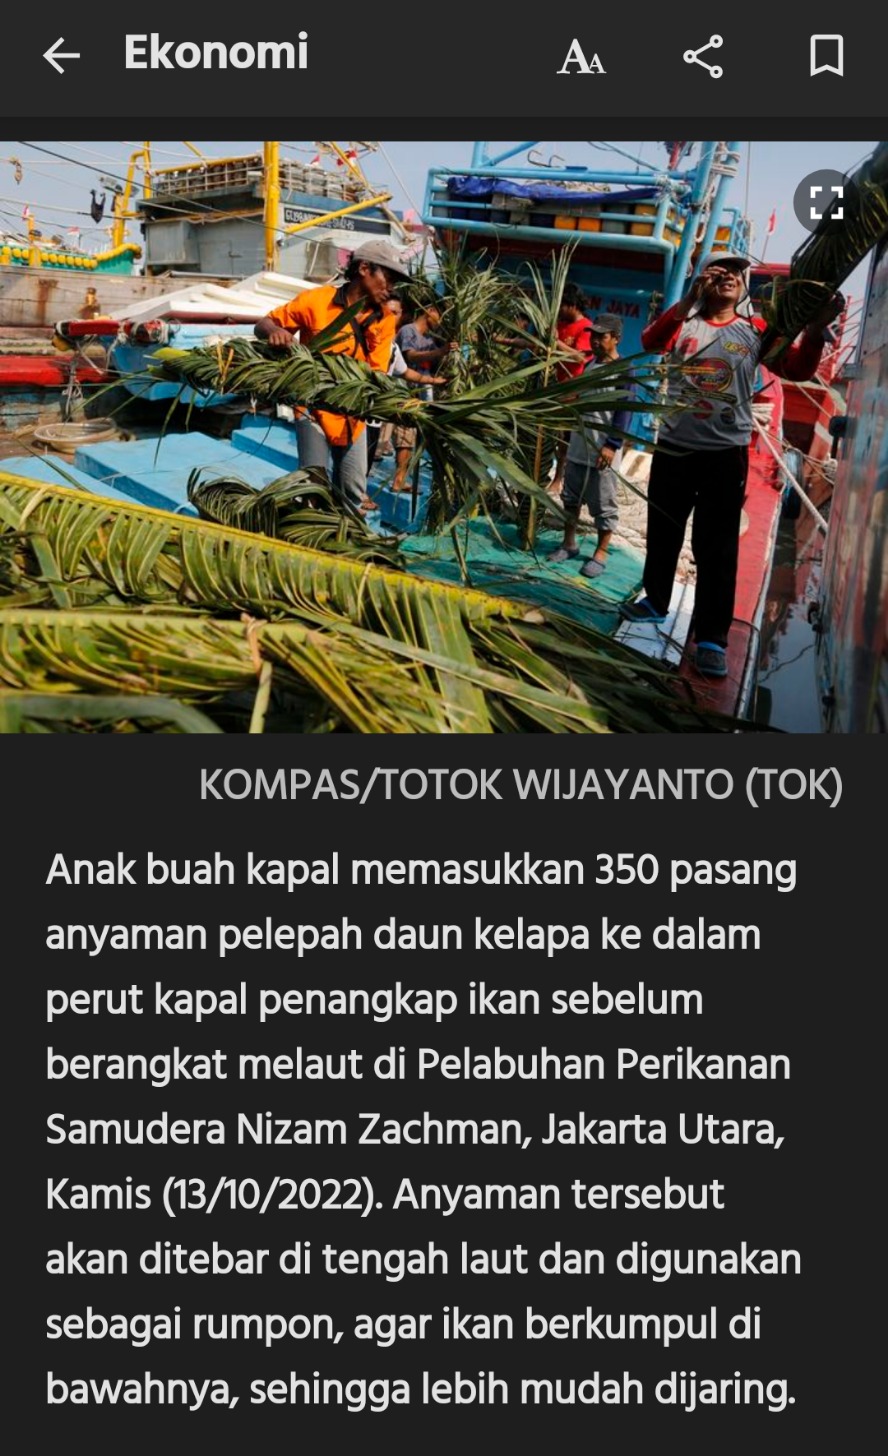 Alasan nelayan membawa belarak hijau ke laut